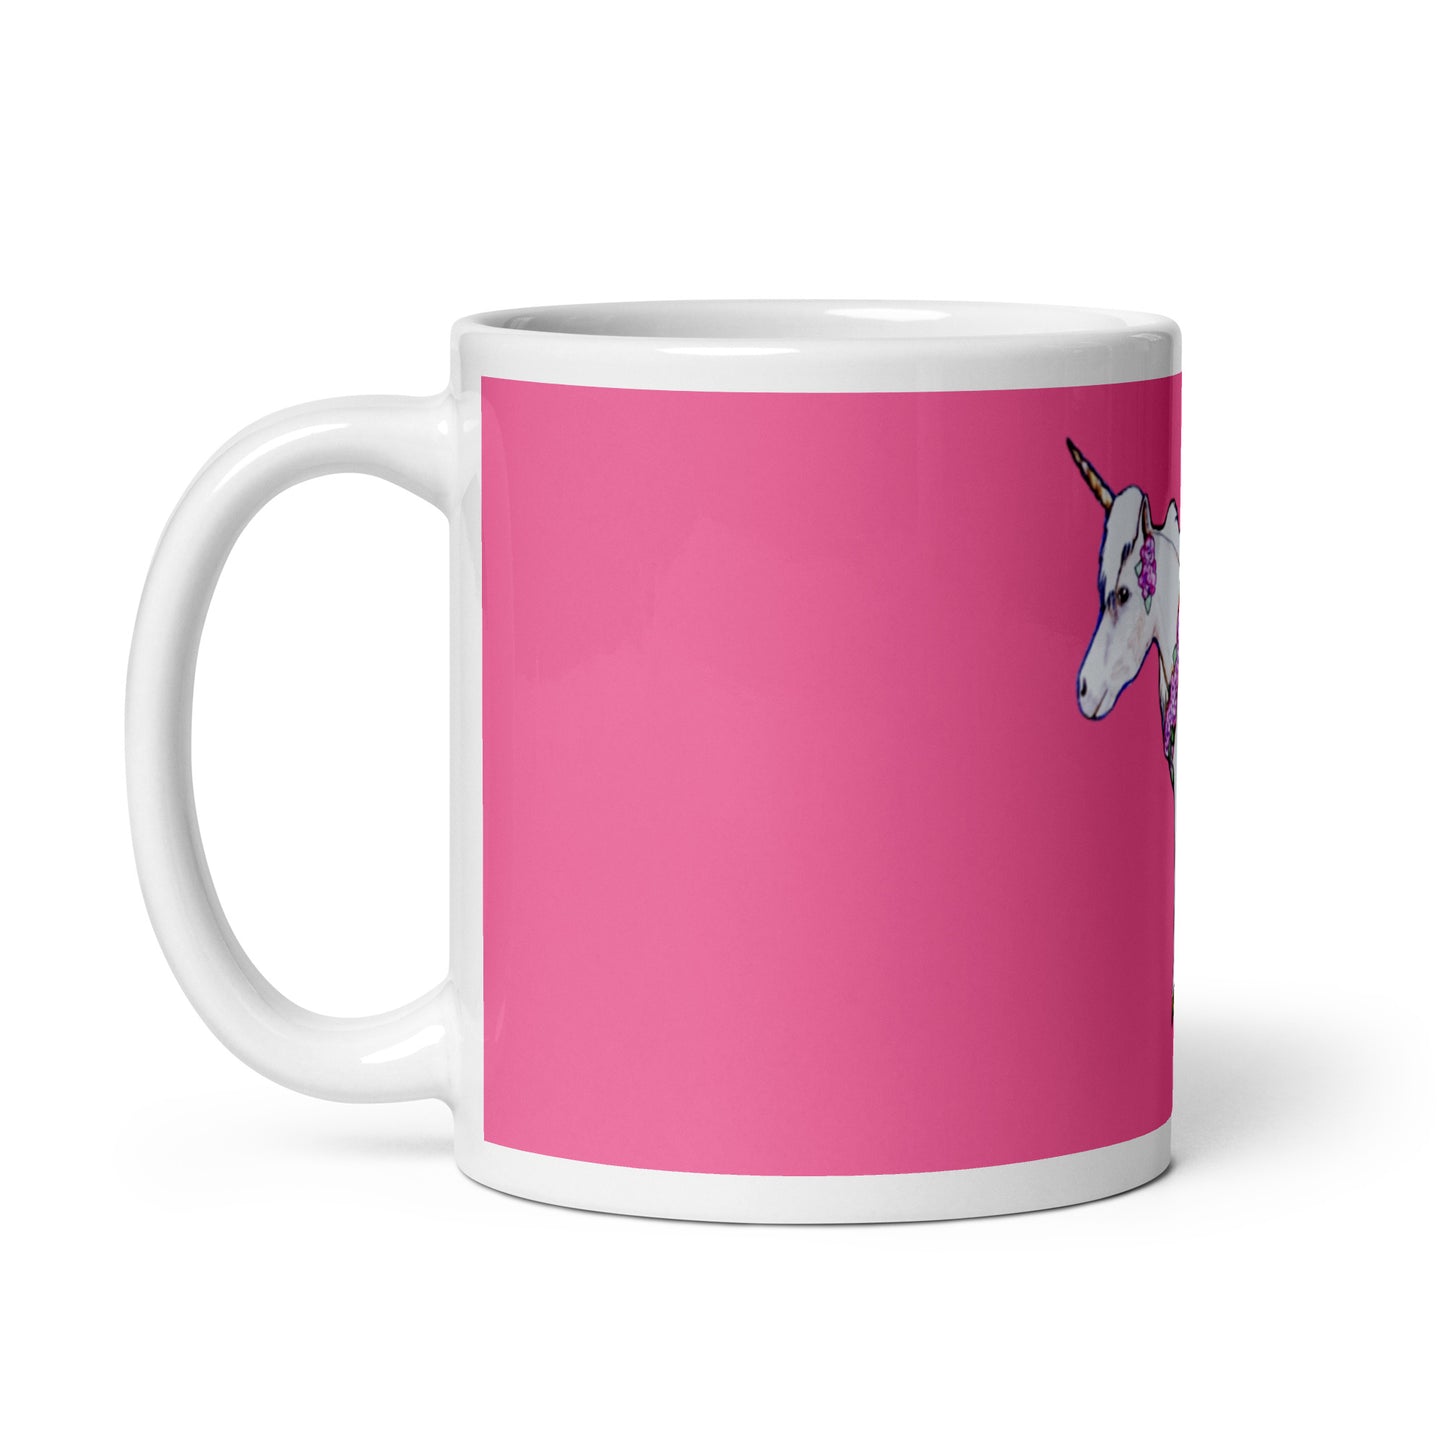 Unicorn Horse pink glossy mug